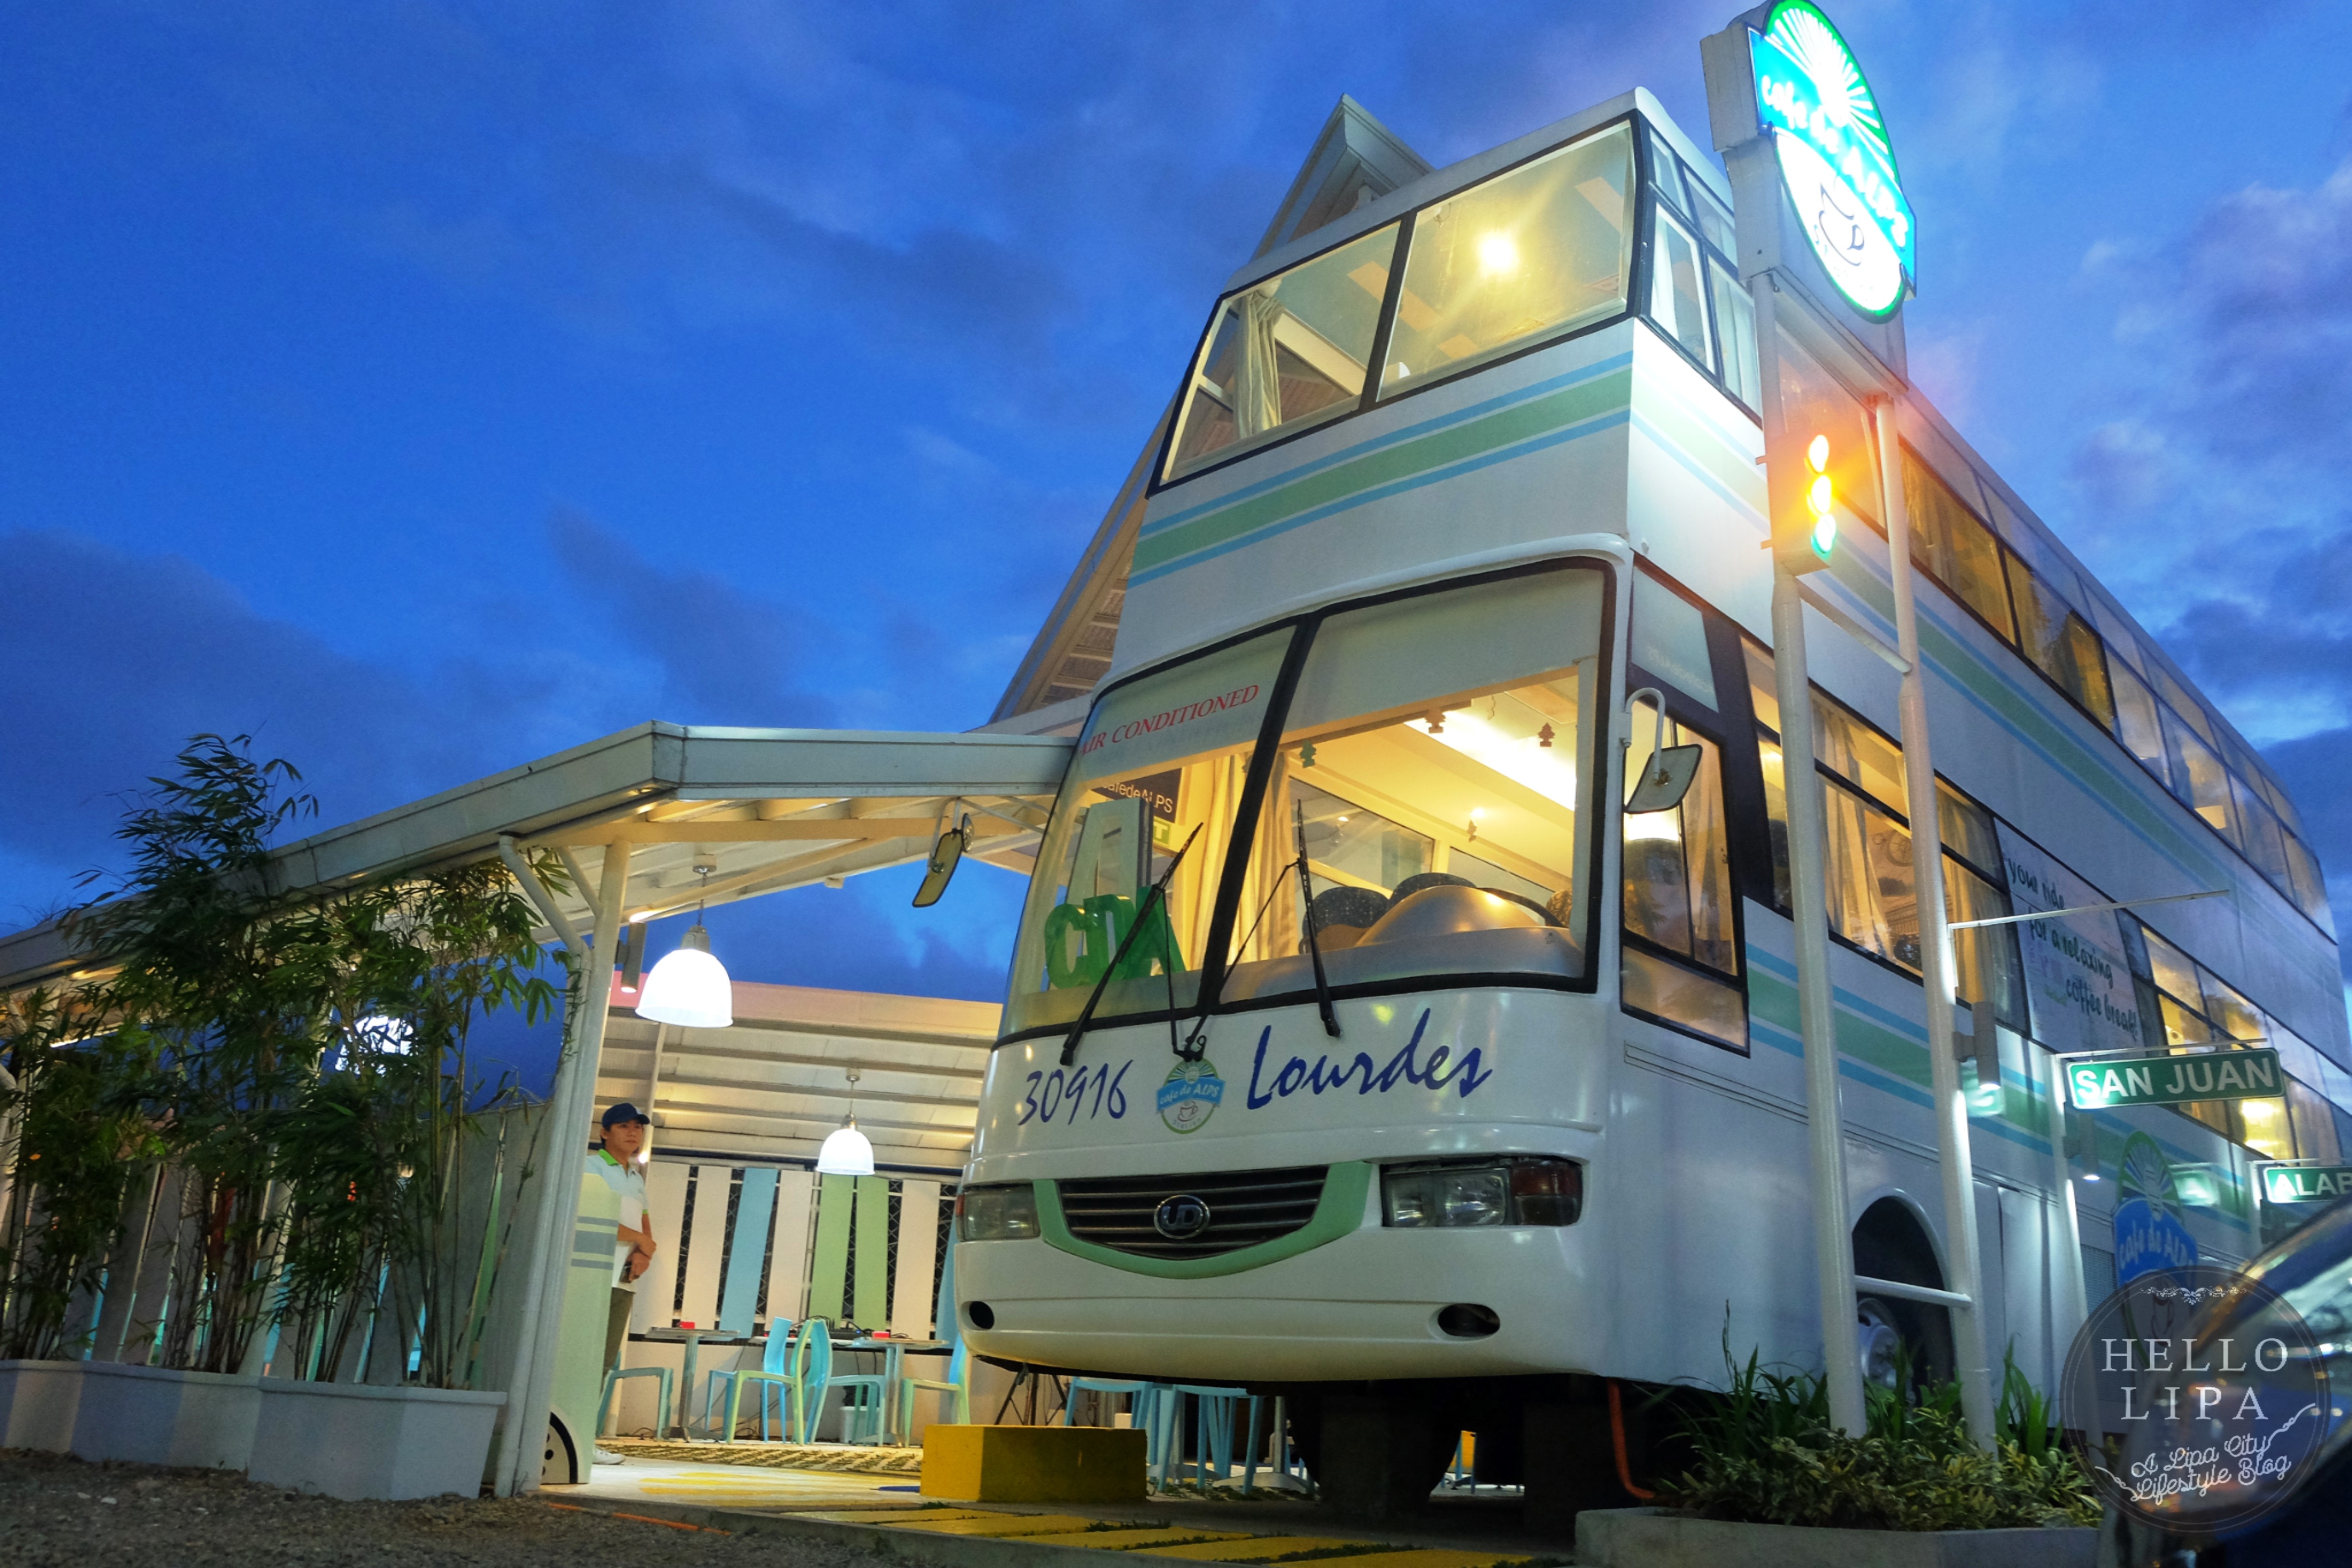 Café de Alps: A Bus-themed Café in Lipa Bound for Food Paradise